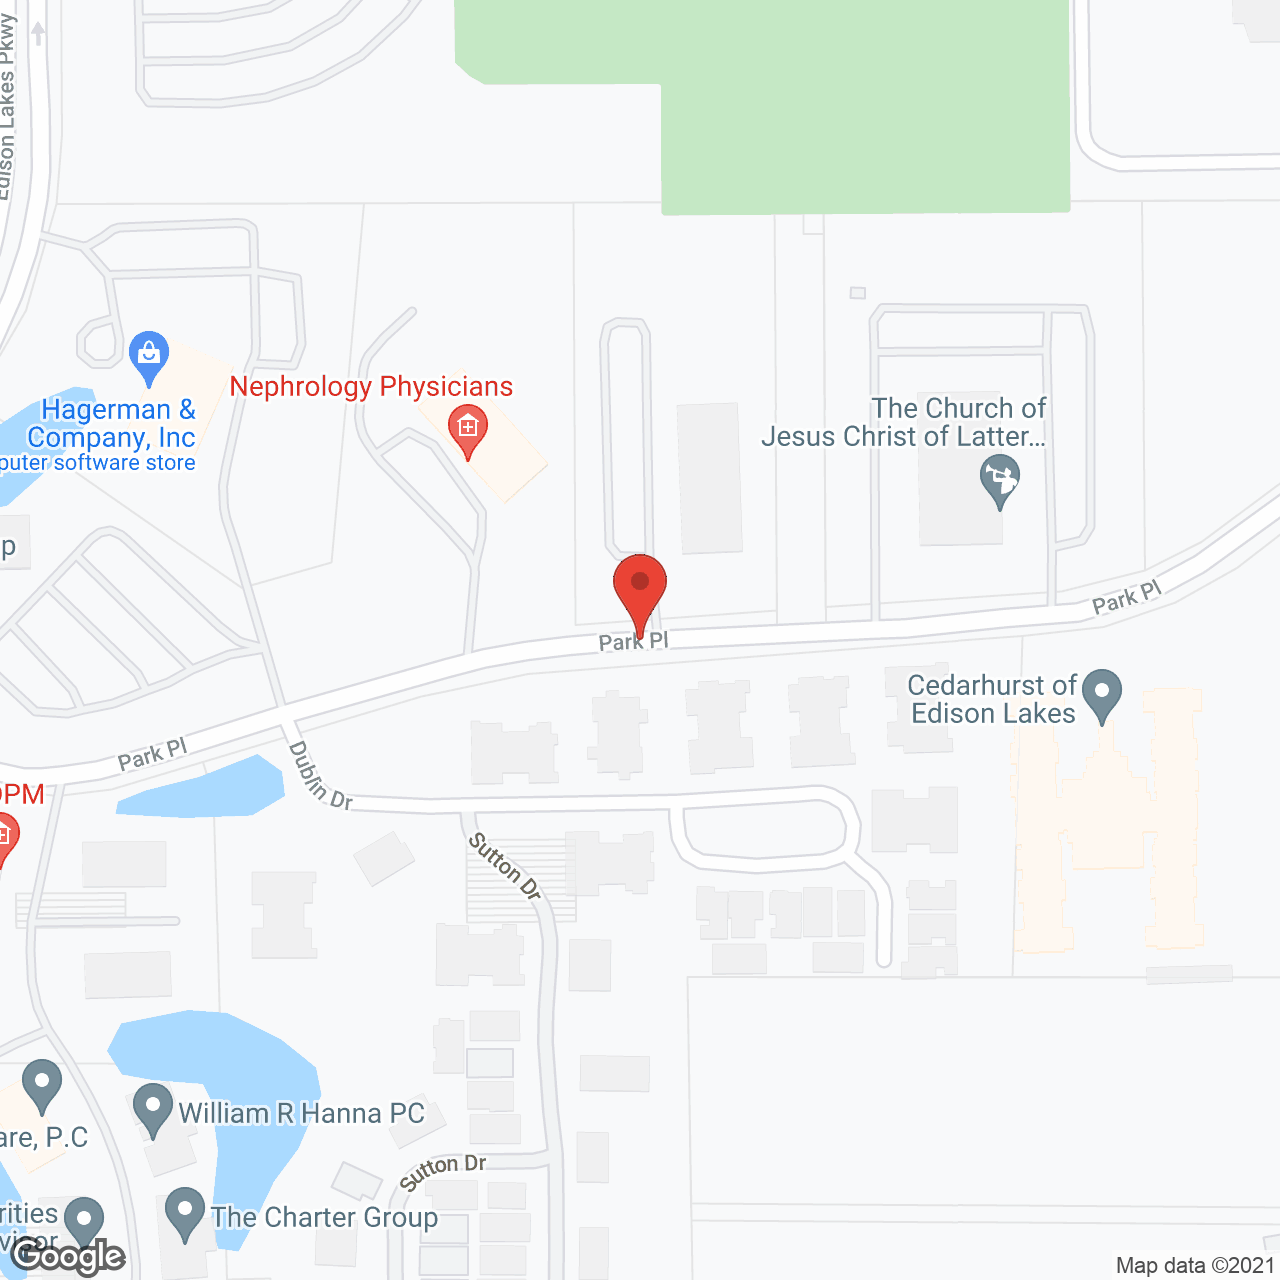 Cedarhurst of Edison Lakes in google map